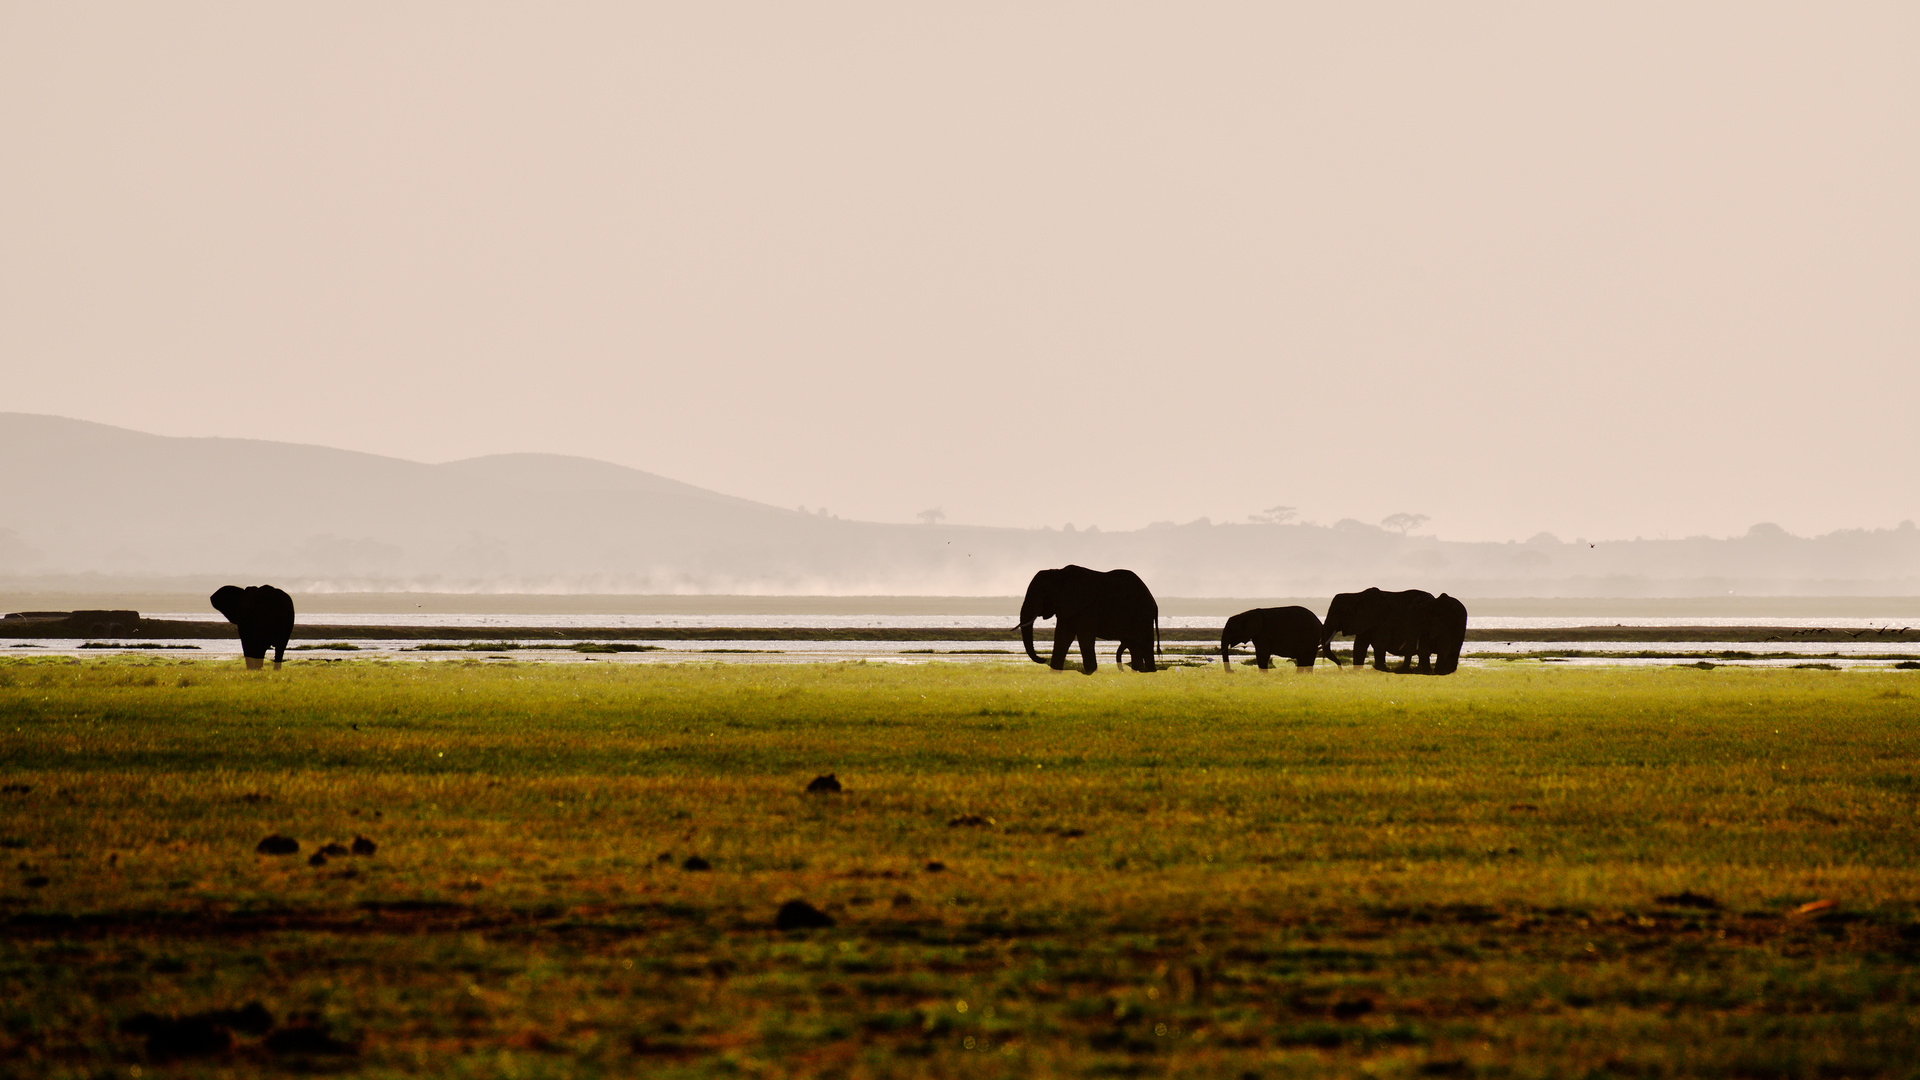 Elephants in their surroundings